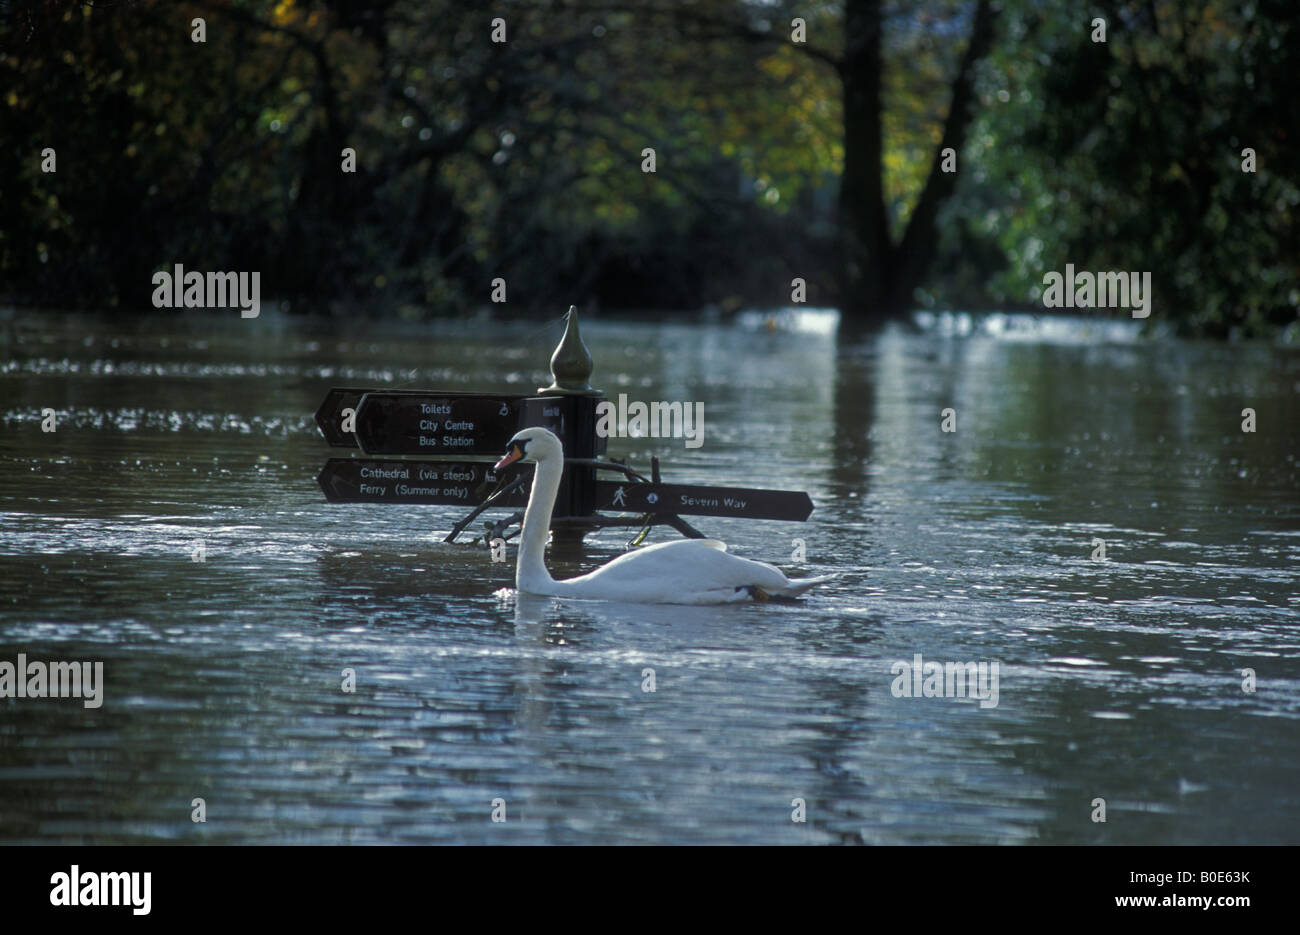 Flooding on River Severn Worcester England November 2000 Stock Photo